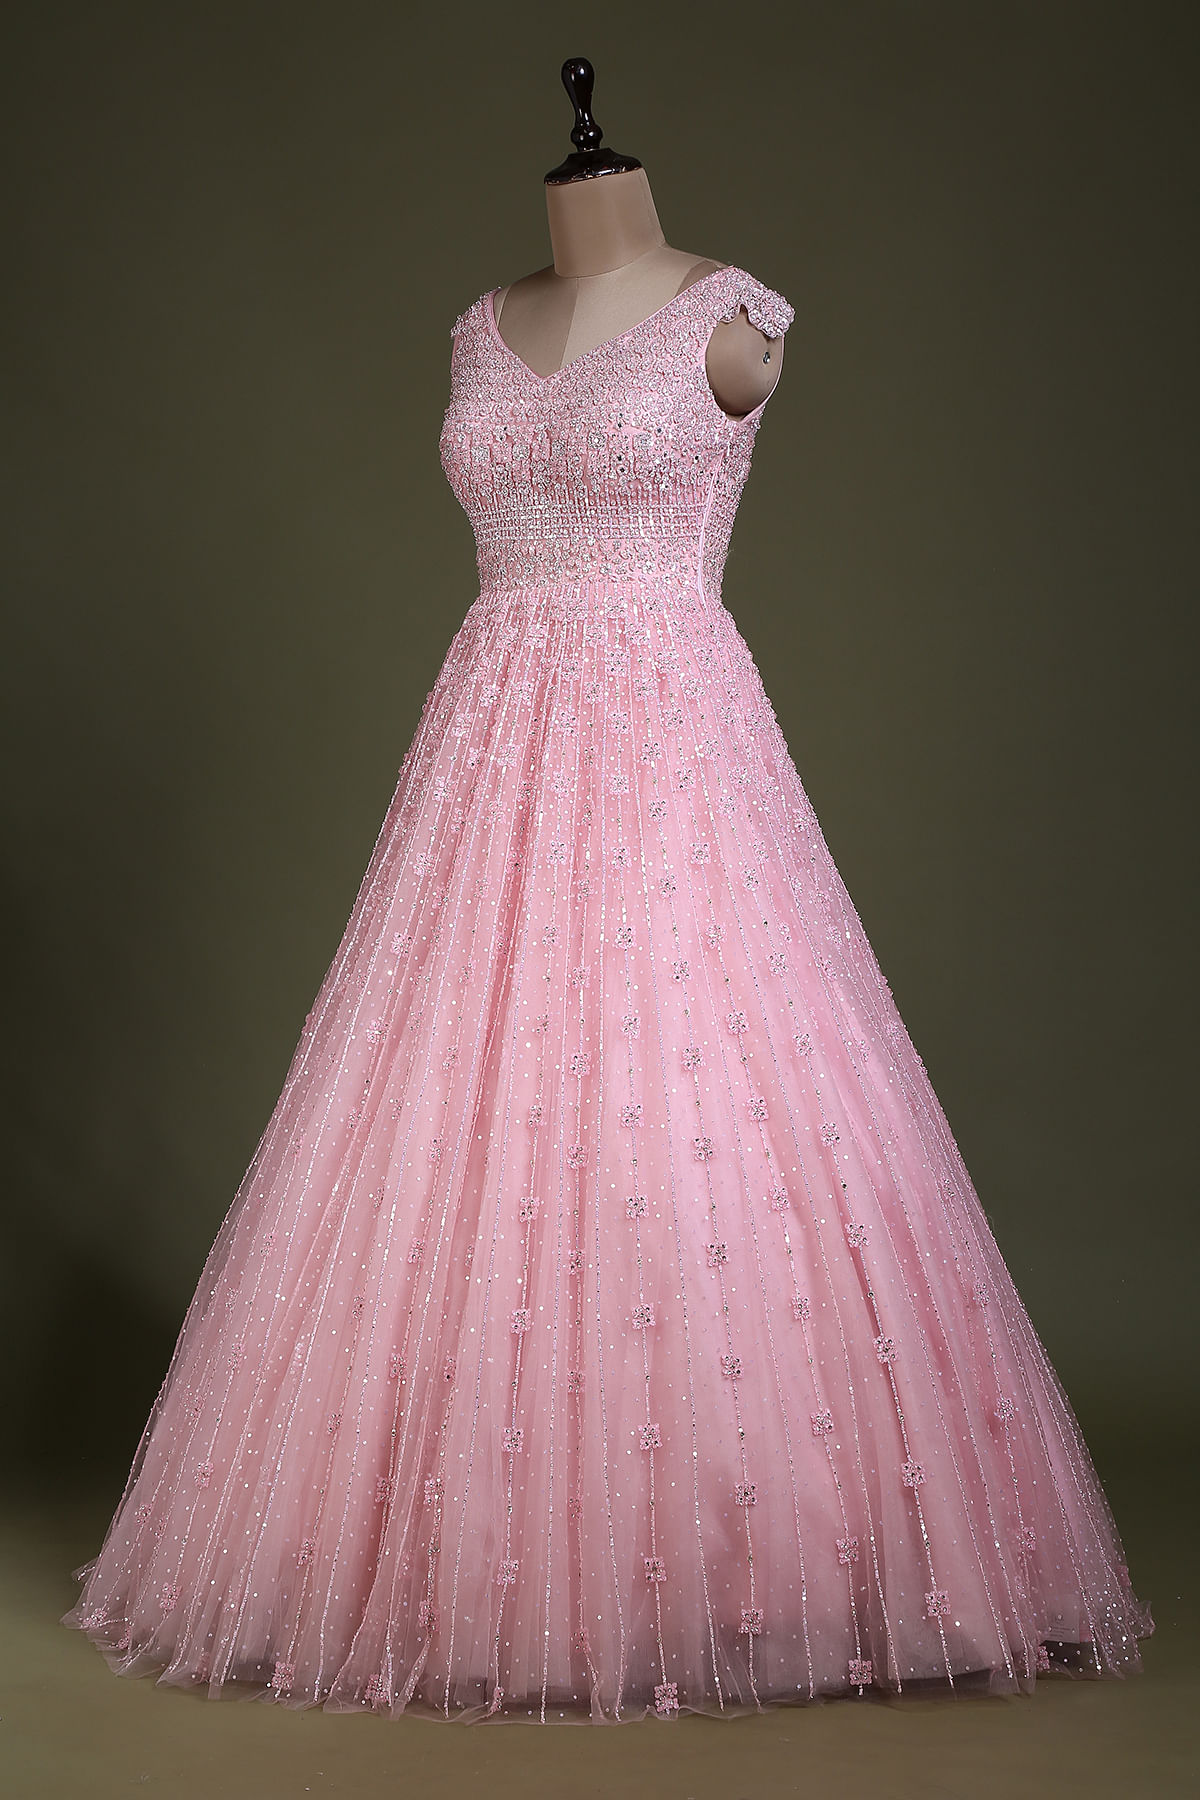 25 Pink & Blush Wedding Dresses | SouthBound Bride